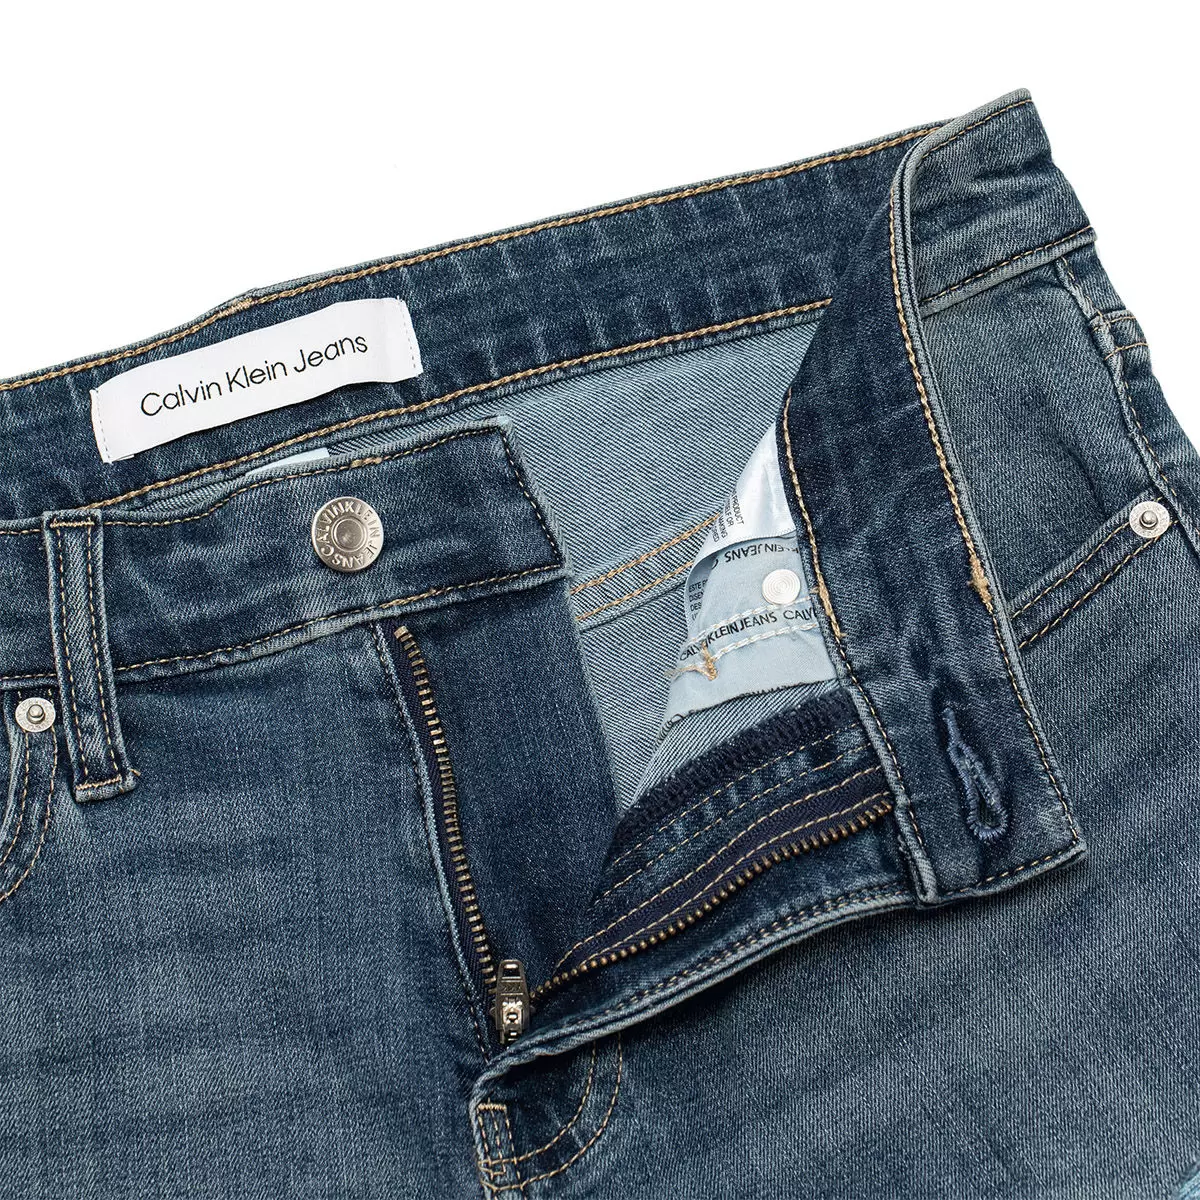 Calvin Klein Jeans 男彈性修身牛仔褲 腰圍 32吋 X 褲長 32吋